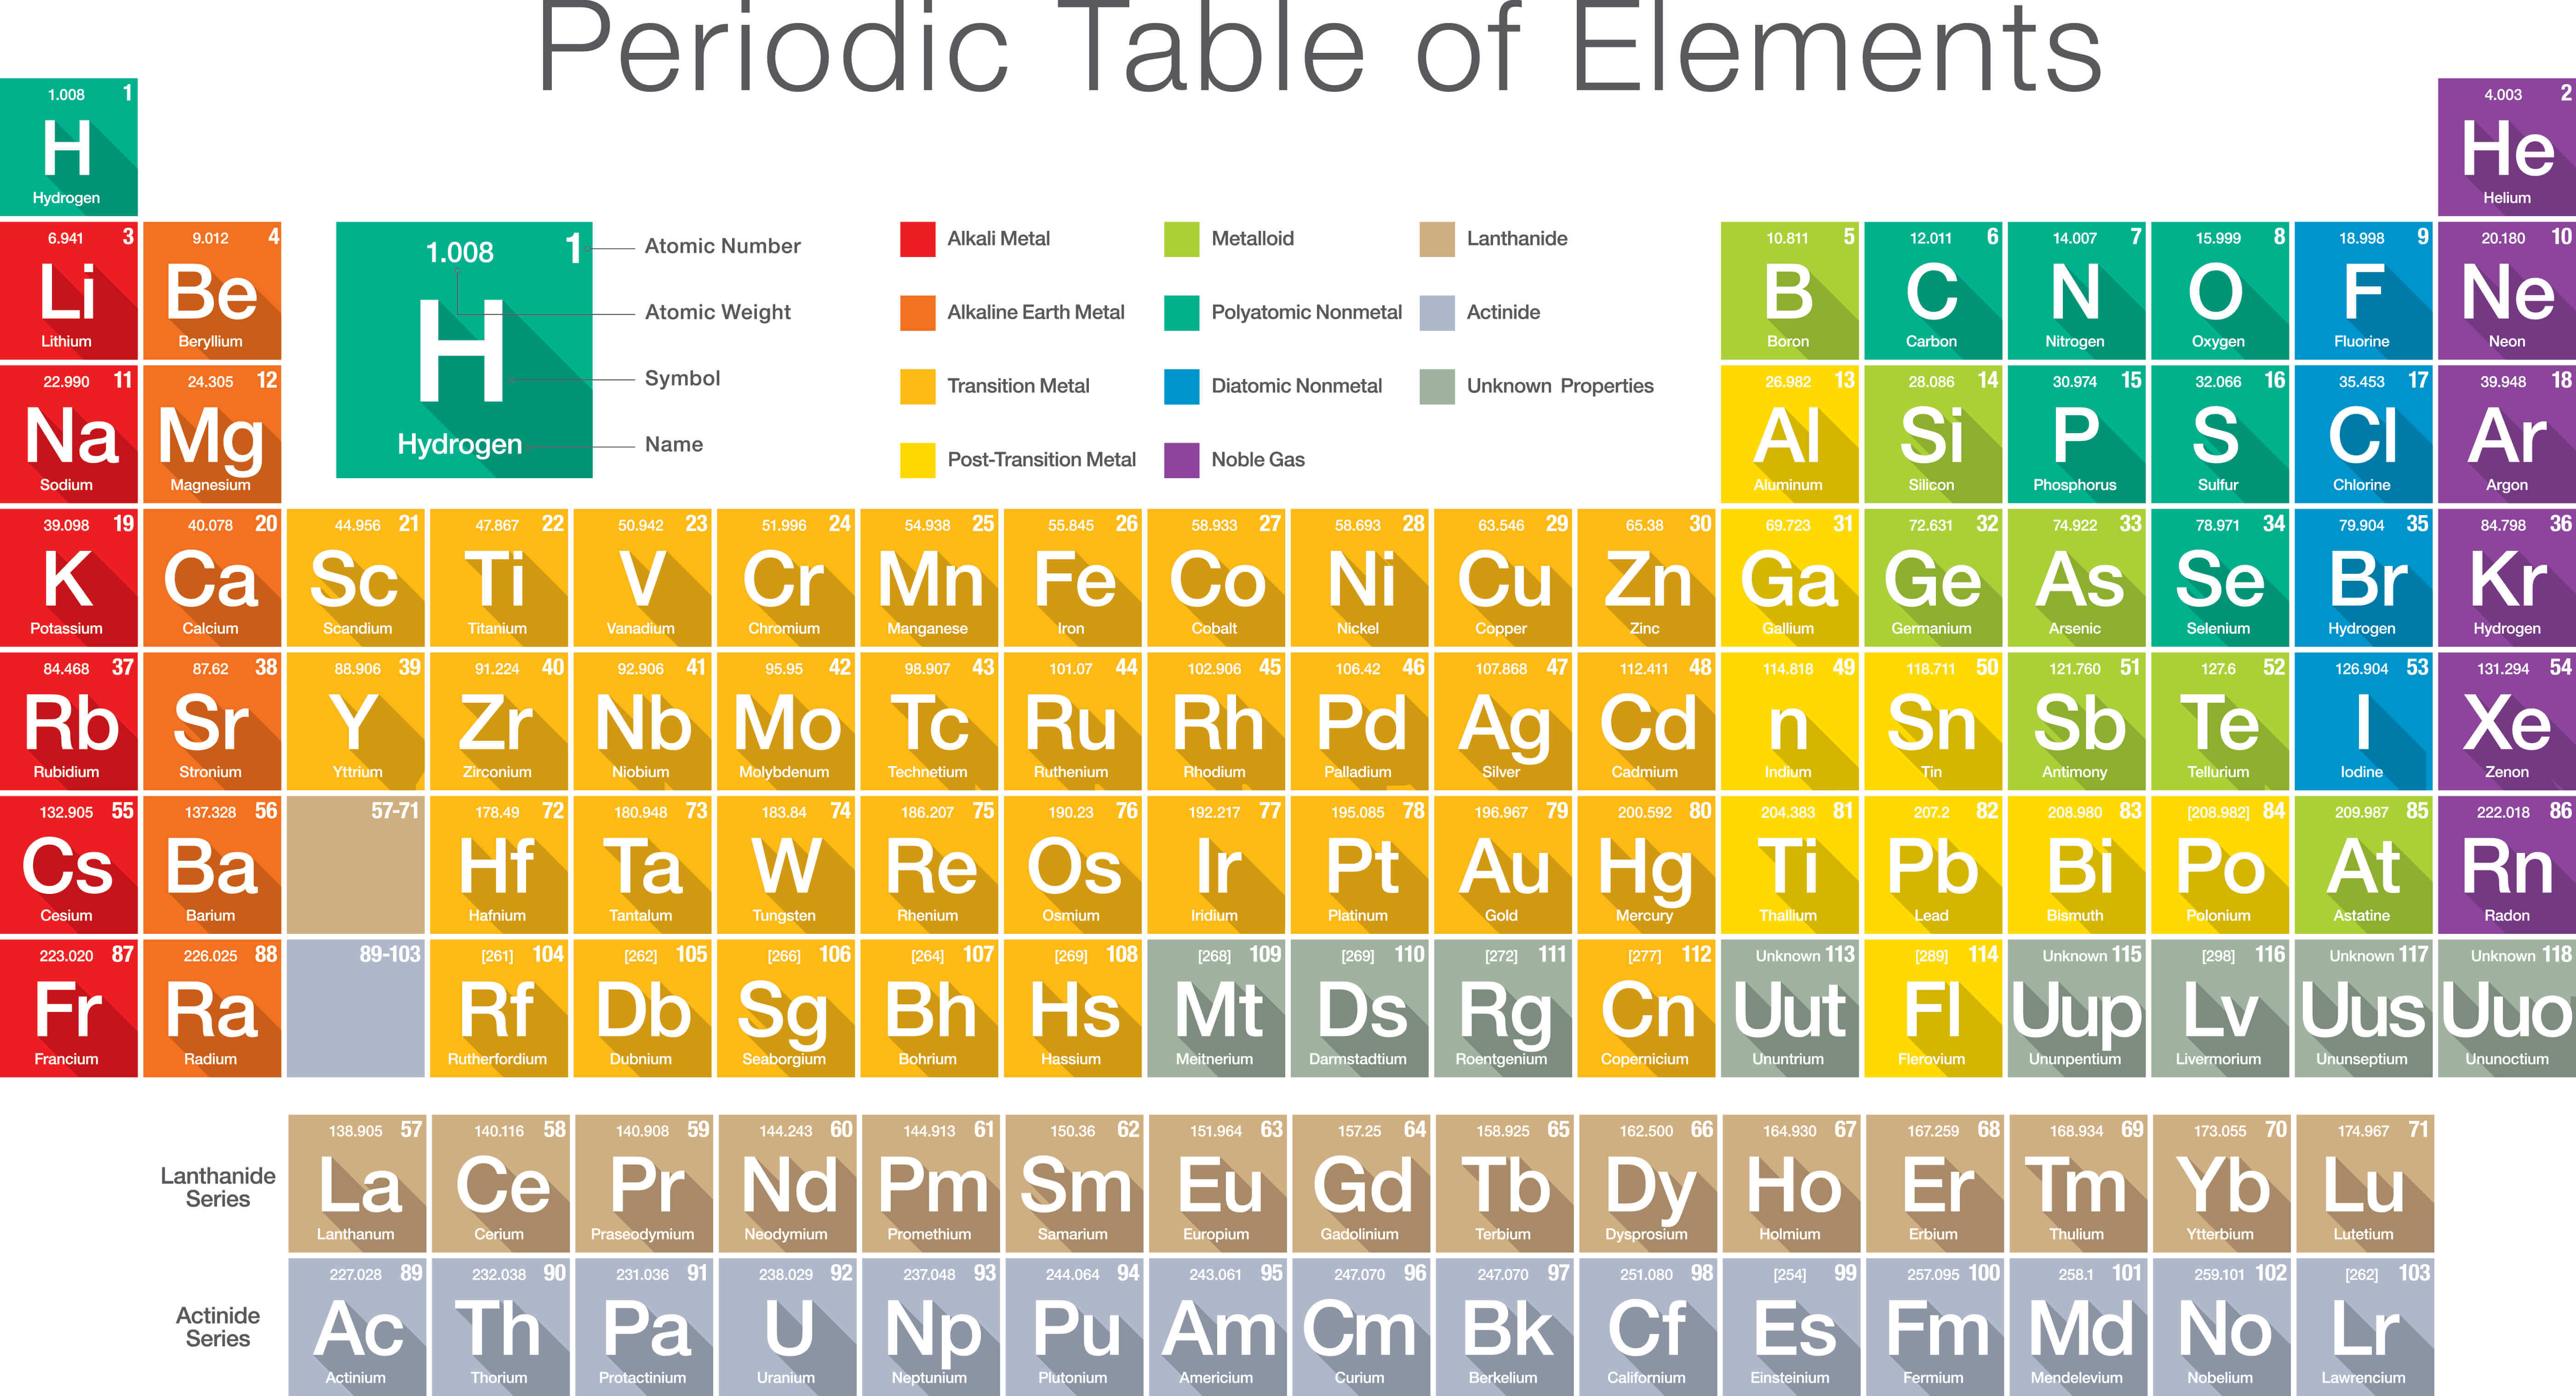 na element group